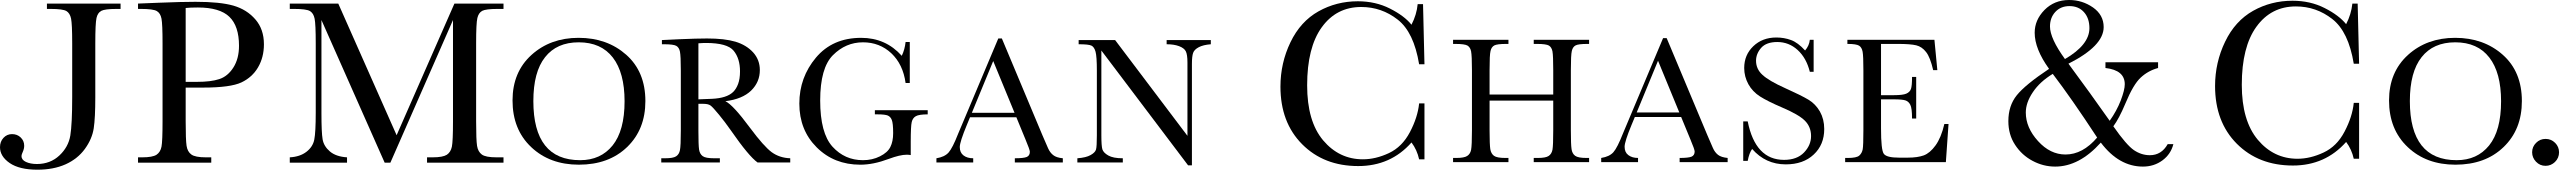 File:J P Morgan Chase Logo 2008 1.svg - Wikimedia Commons